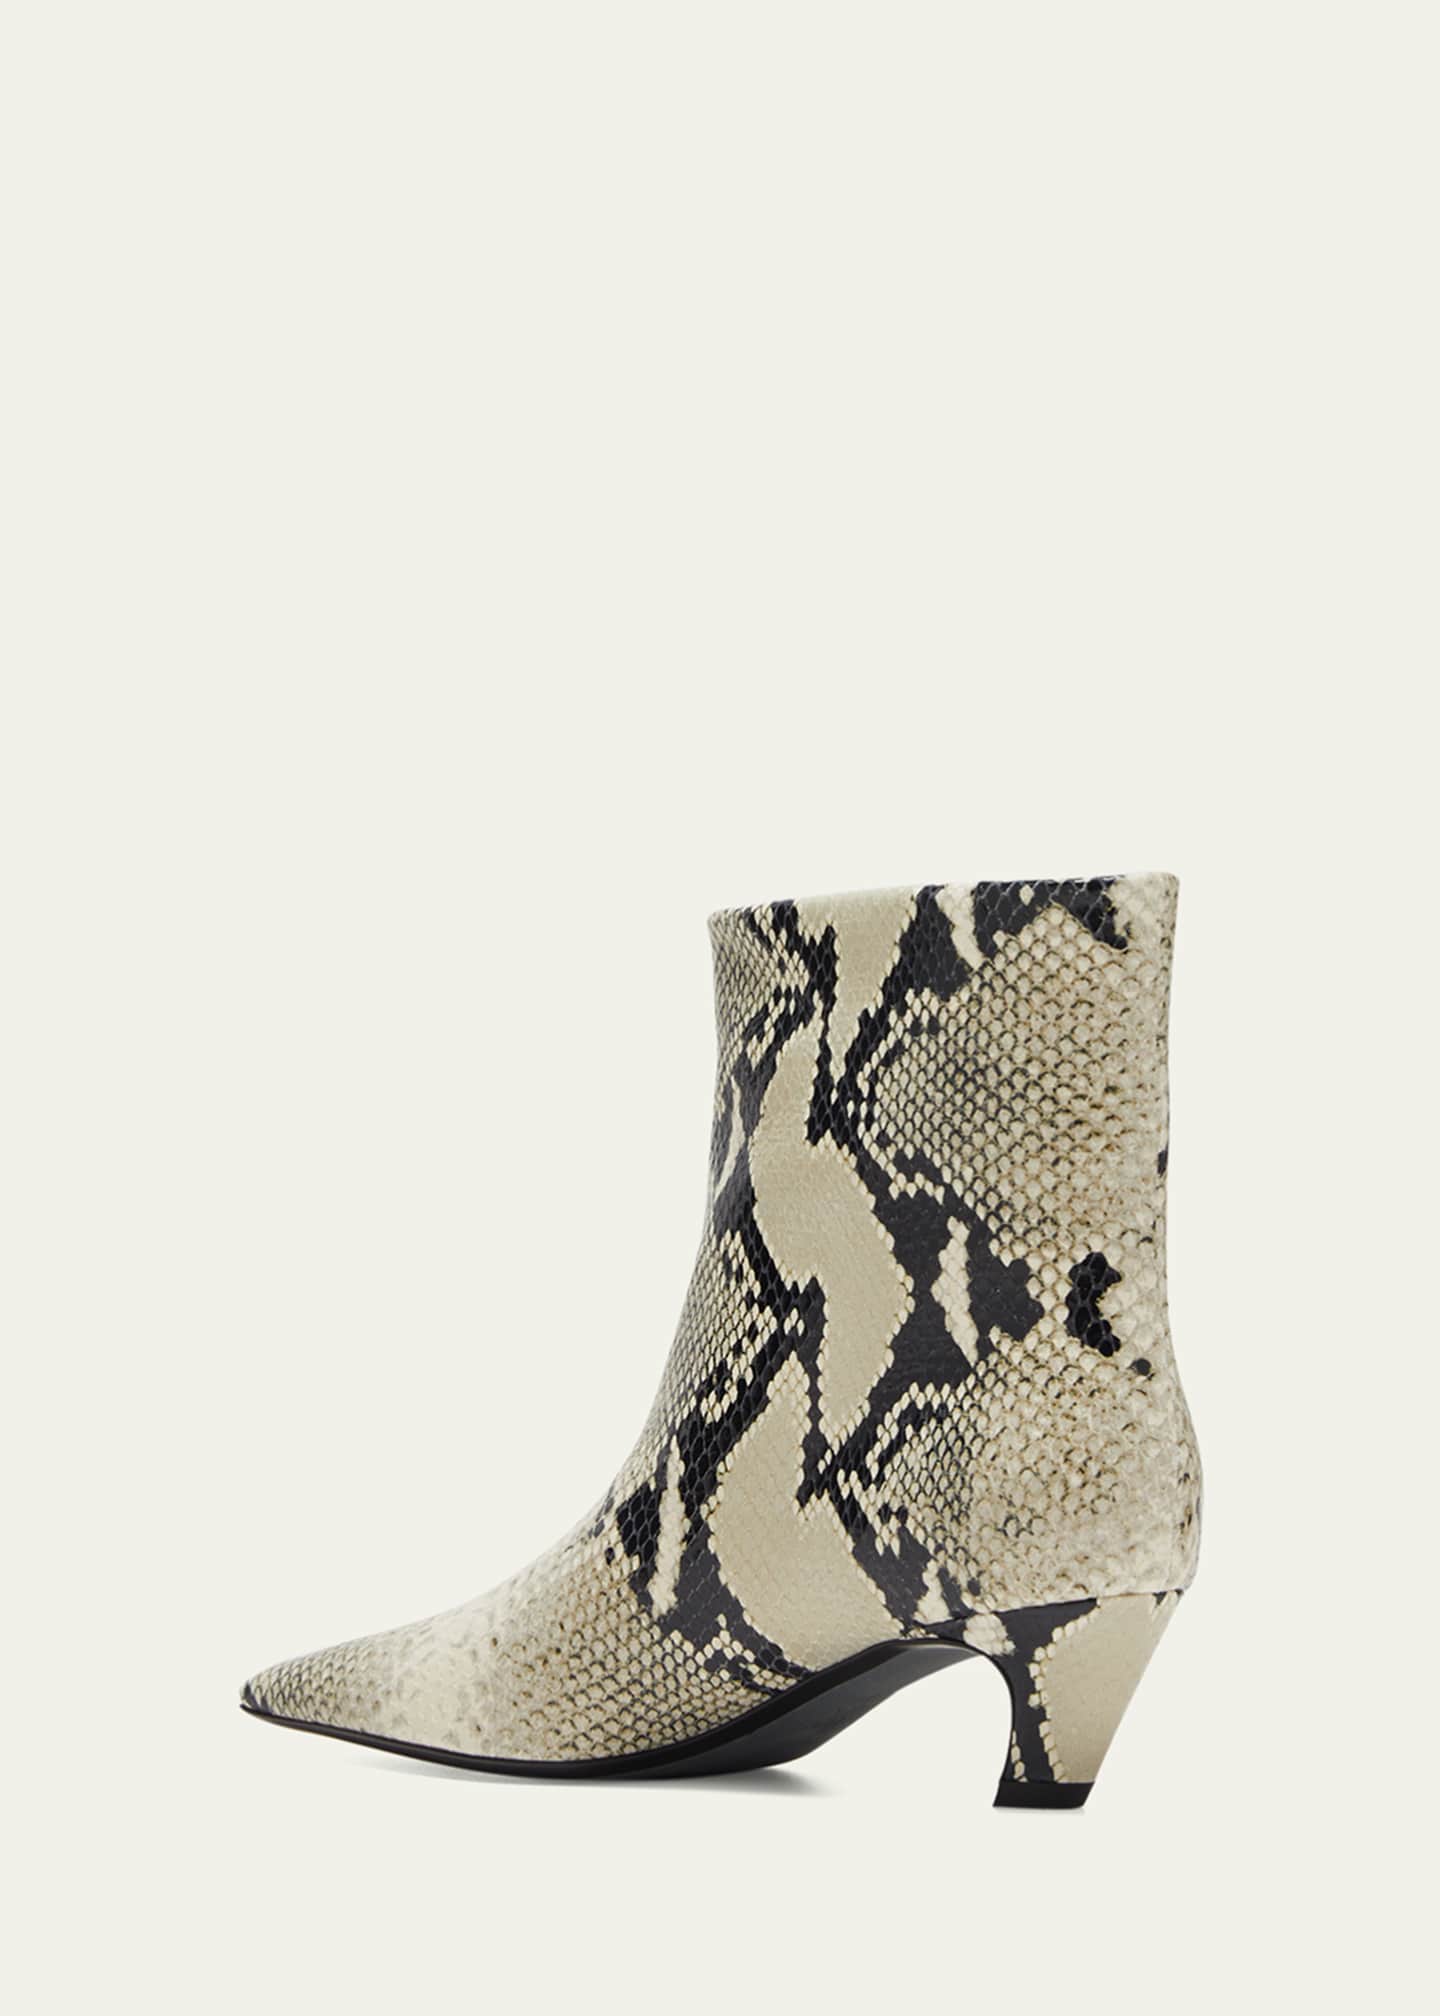 Khaite Arizona Snake-Print Leather Boots - Bergdorf Goodman